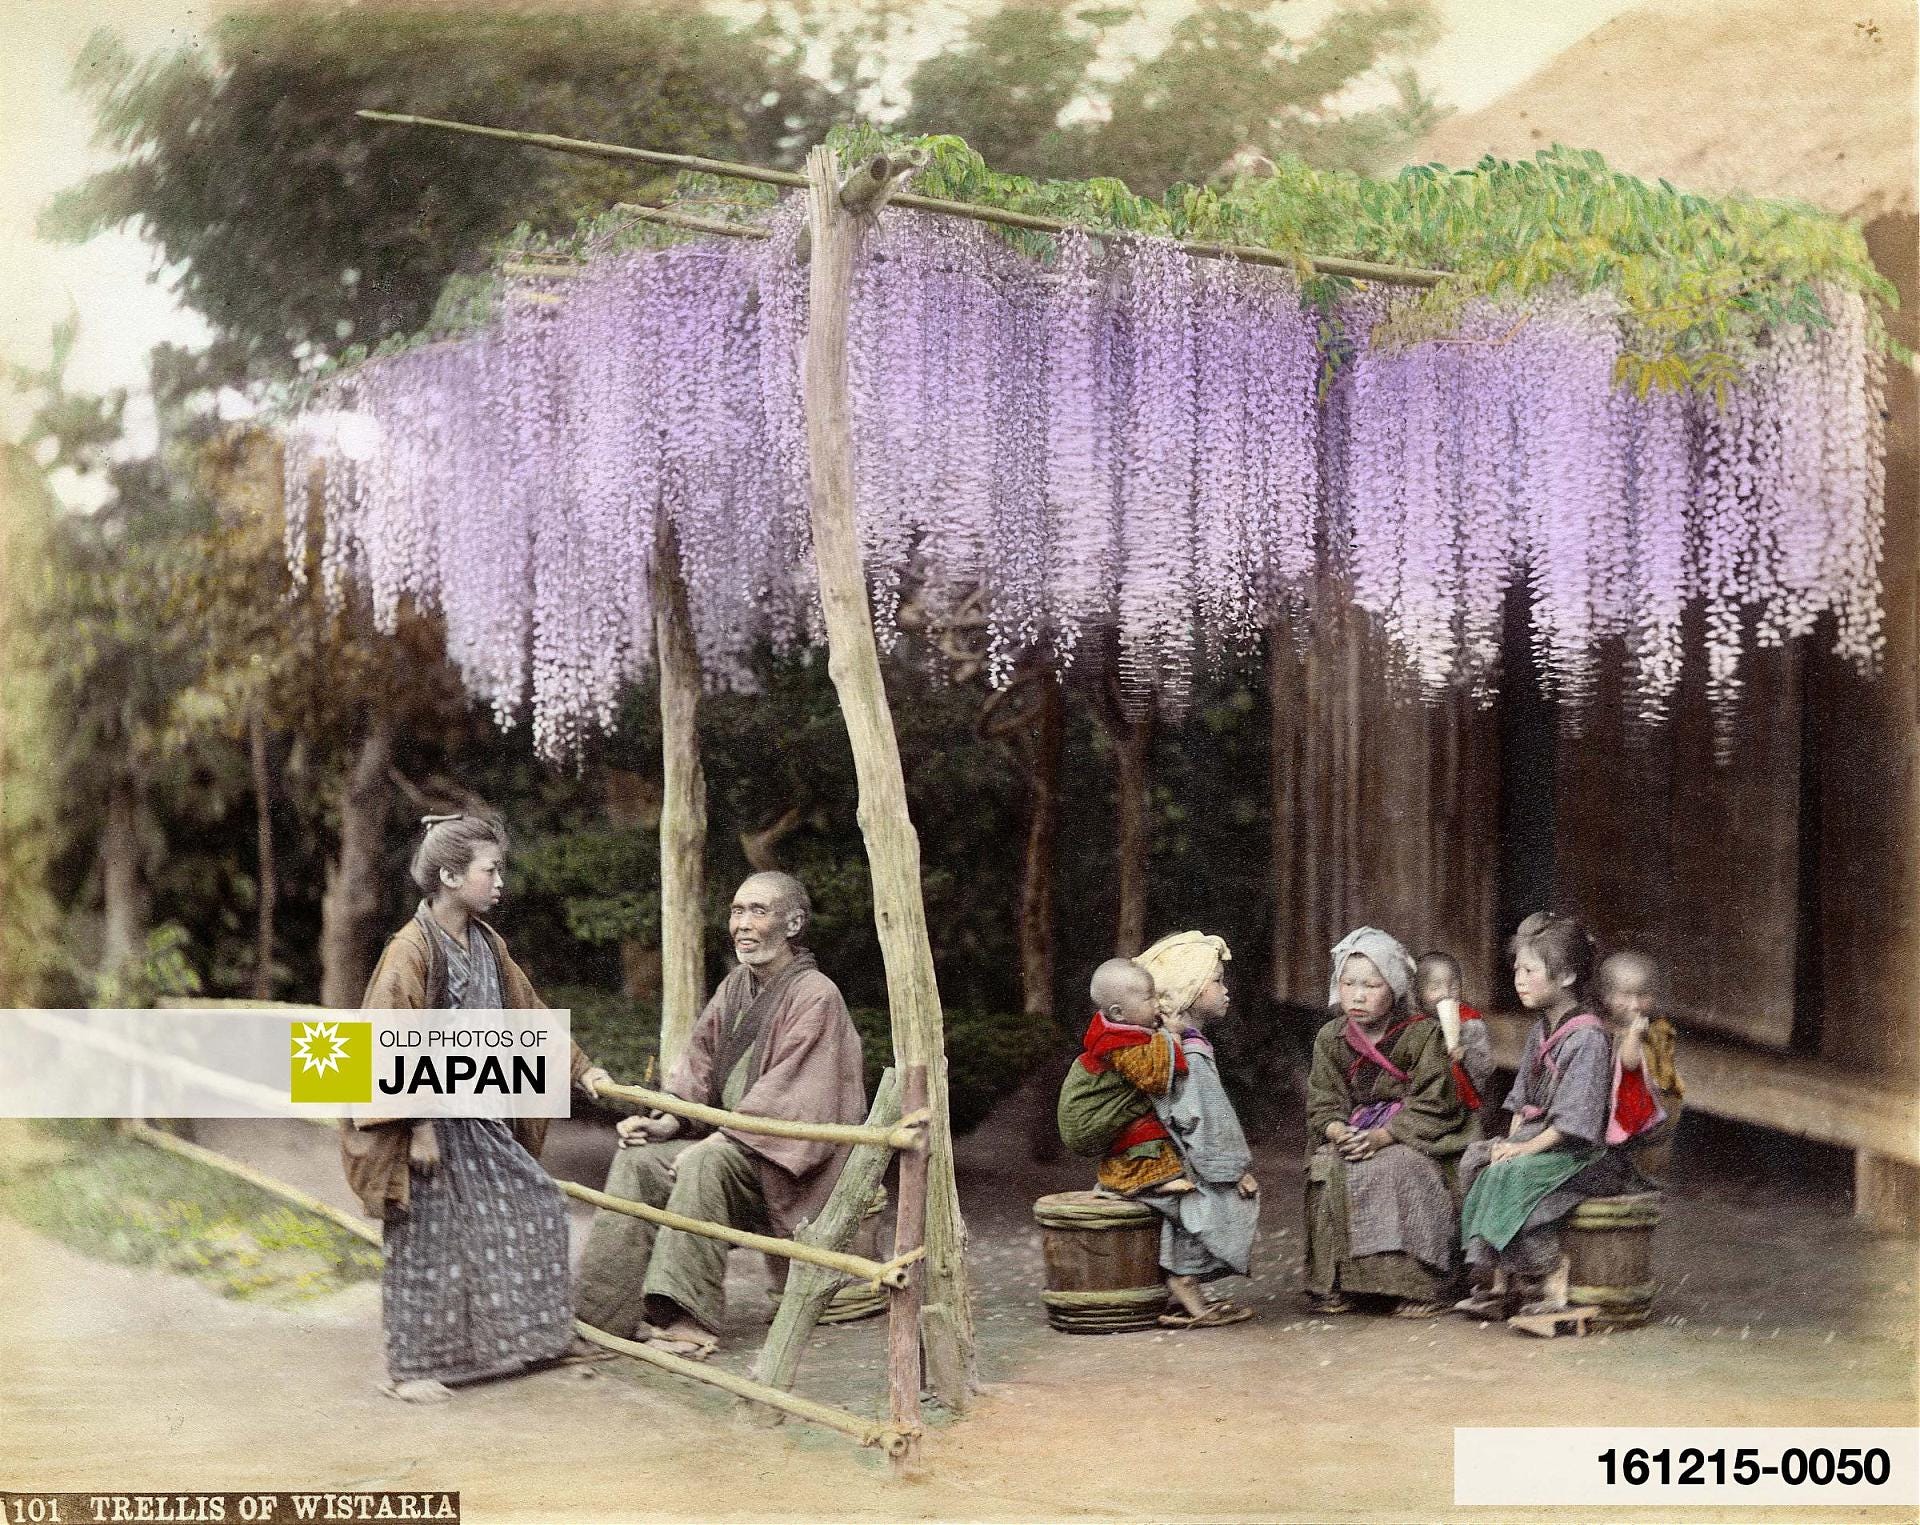 Japanese komori sitting under a trellis of wisteria, 1880s